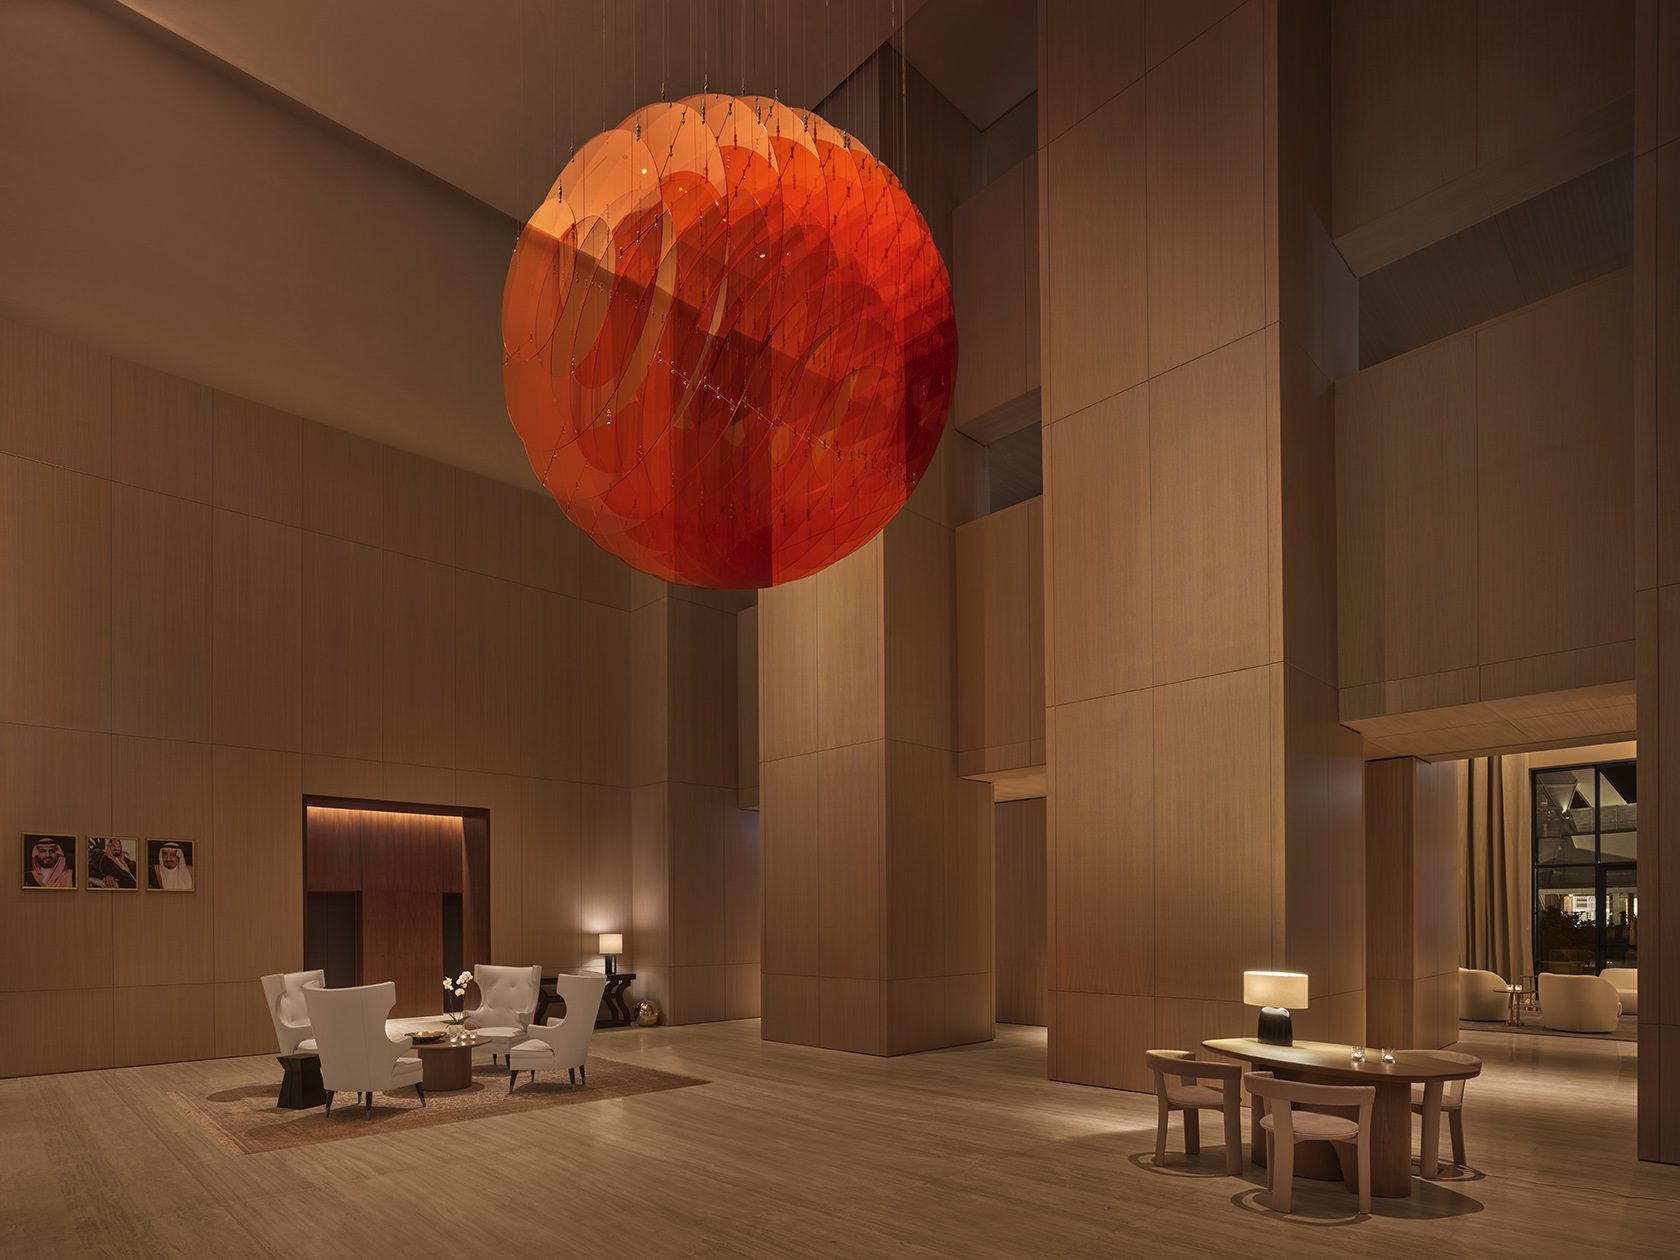 Image of hotel lobby with large orange statement light fixture